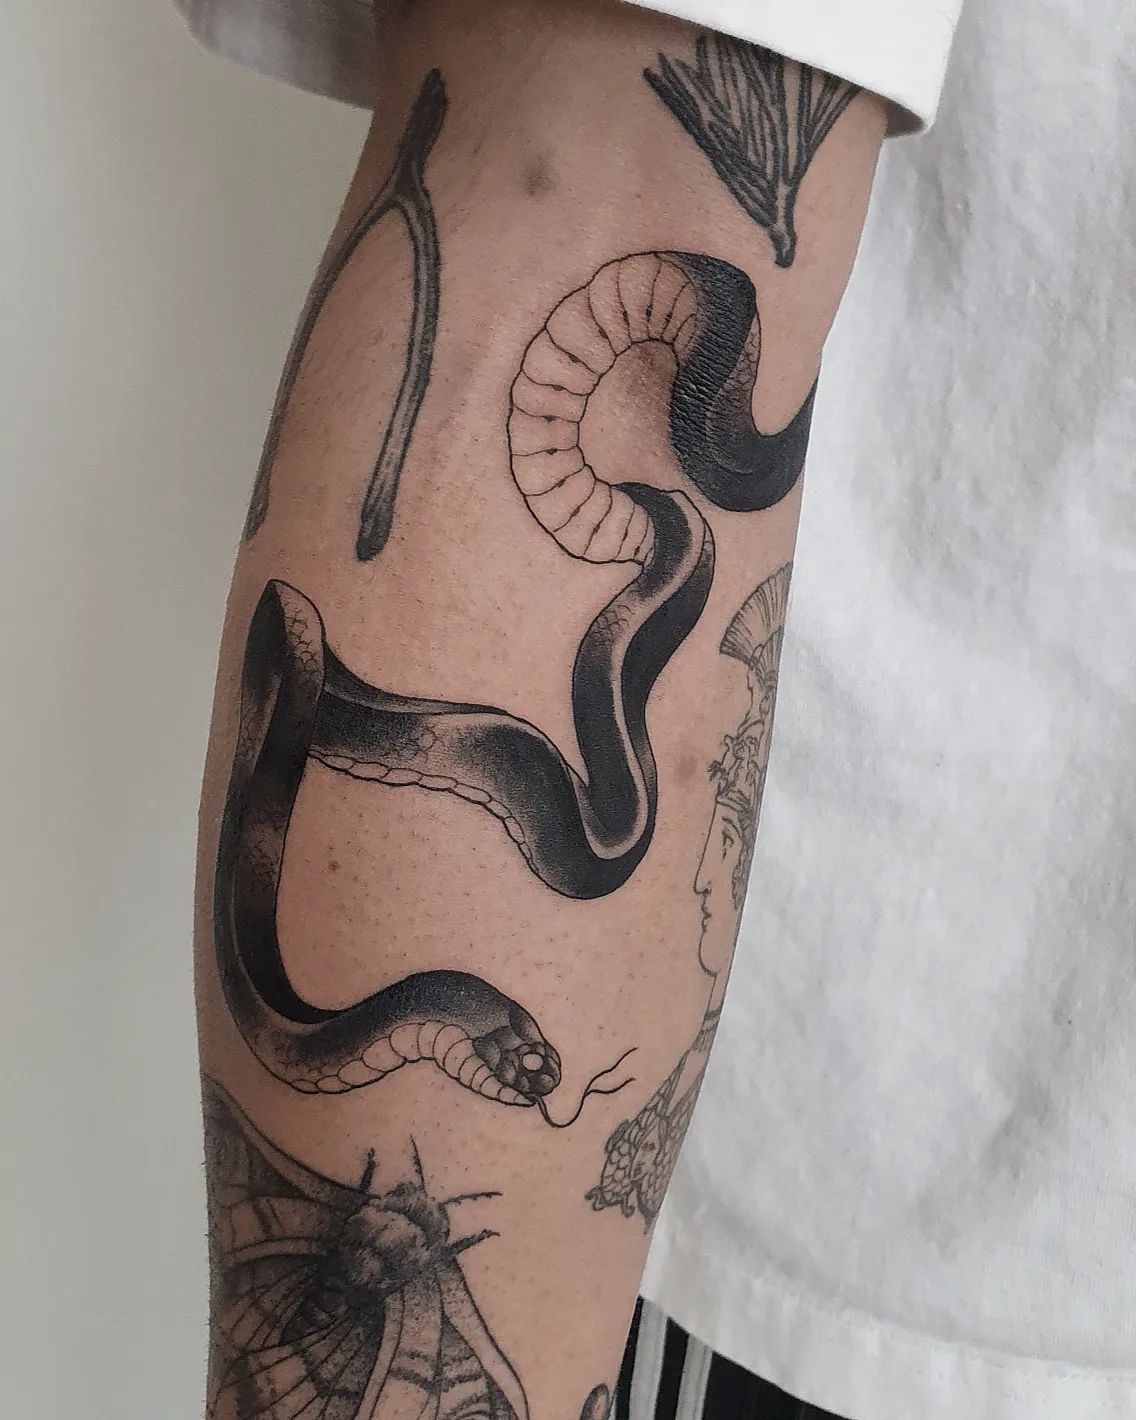 Small snek for @r.reider
.
#tattoo #blackwork #tattoos #snake #ink #tattooartist